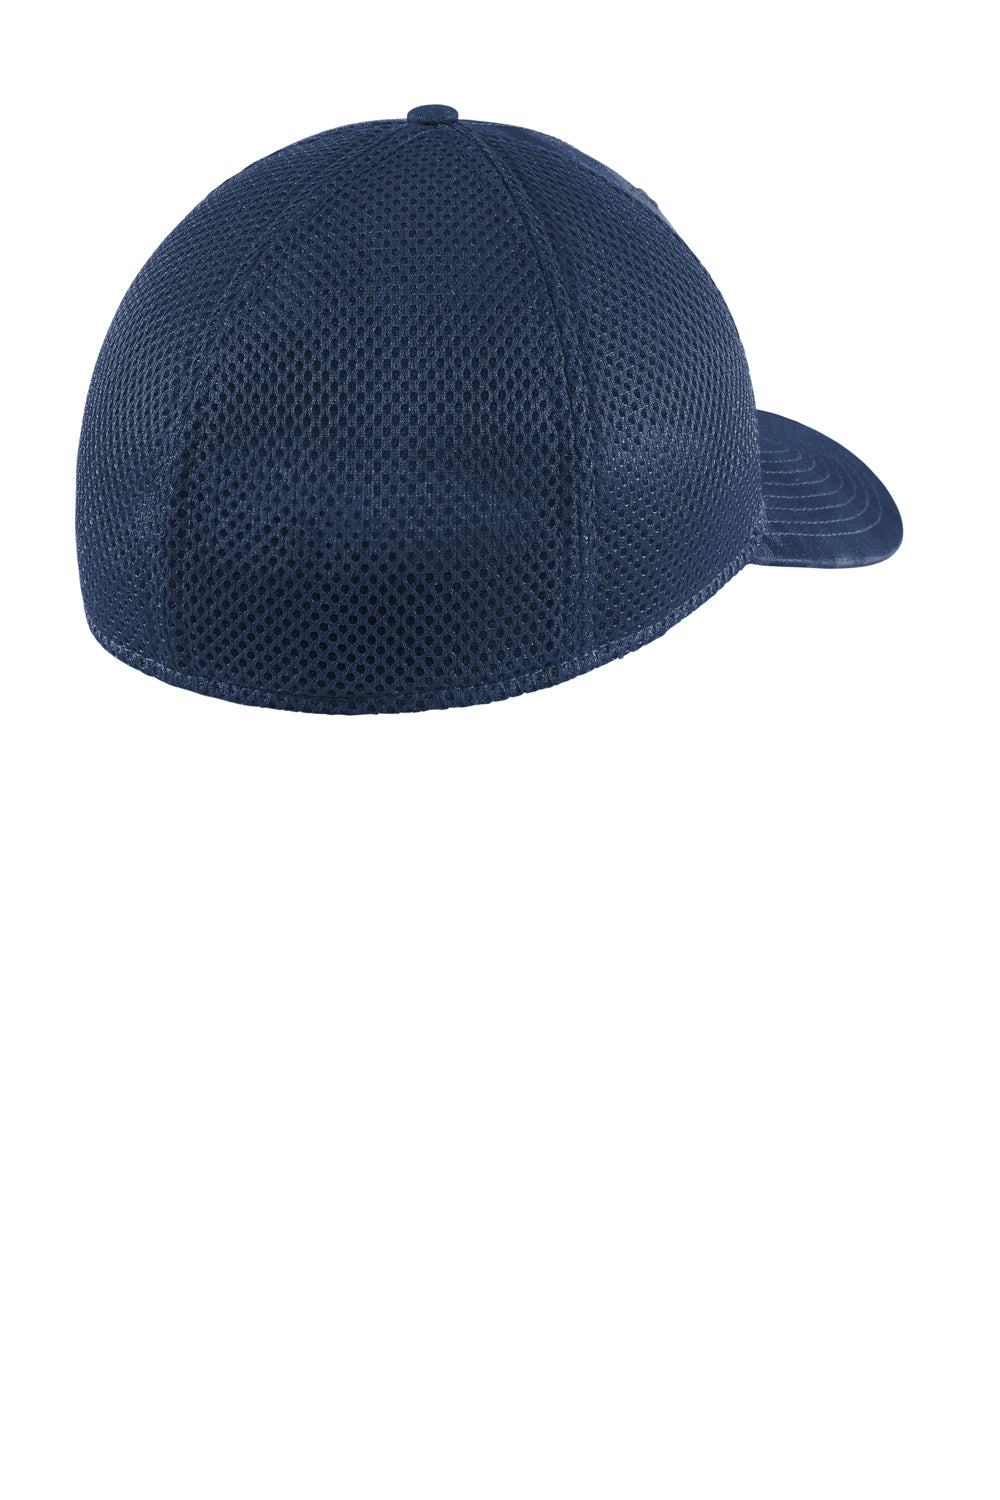 New Era NE1091 Tonal Camo Tech Mesh Stretch Fit Hat Navy Blue Camo Side